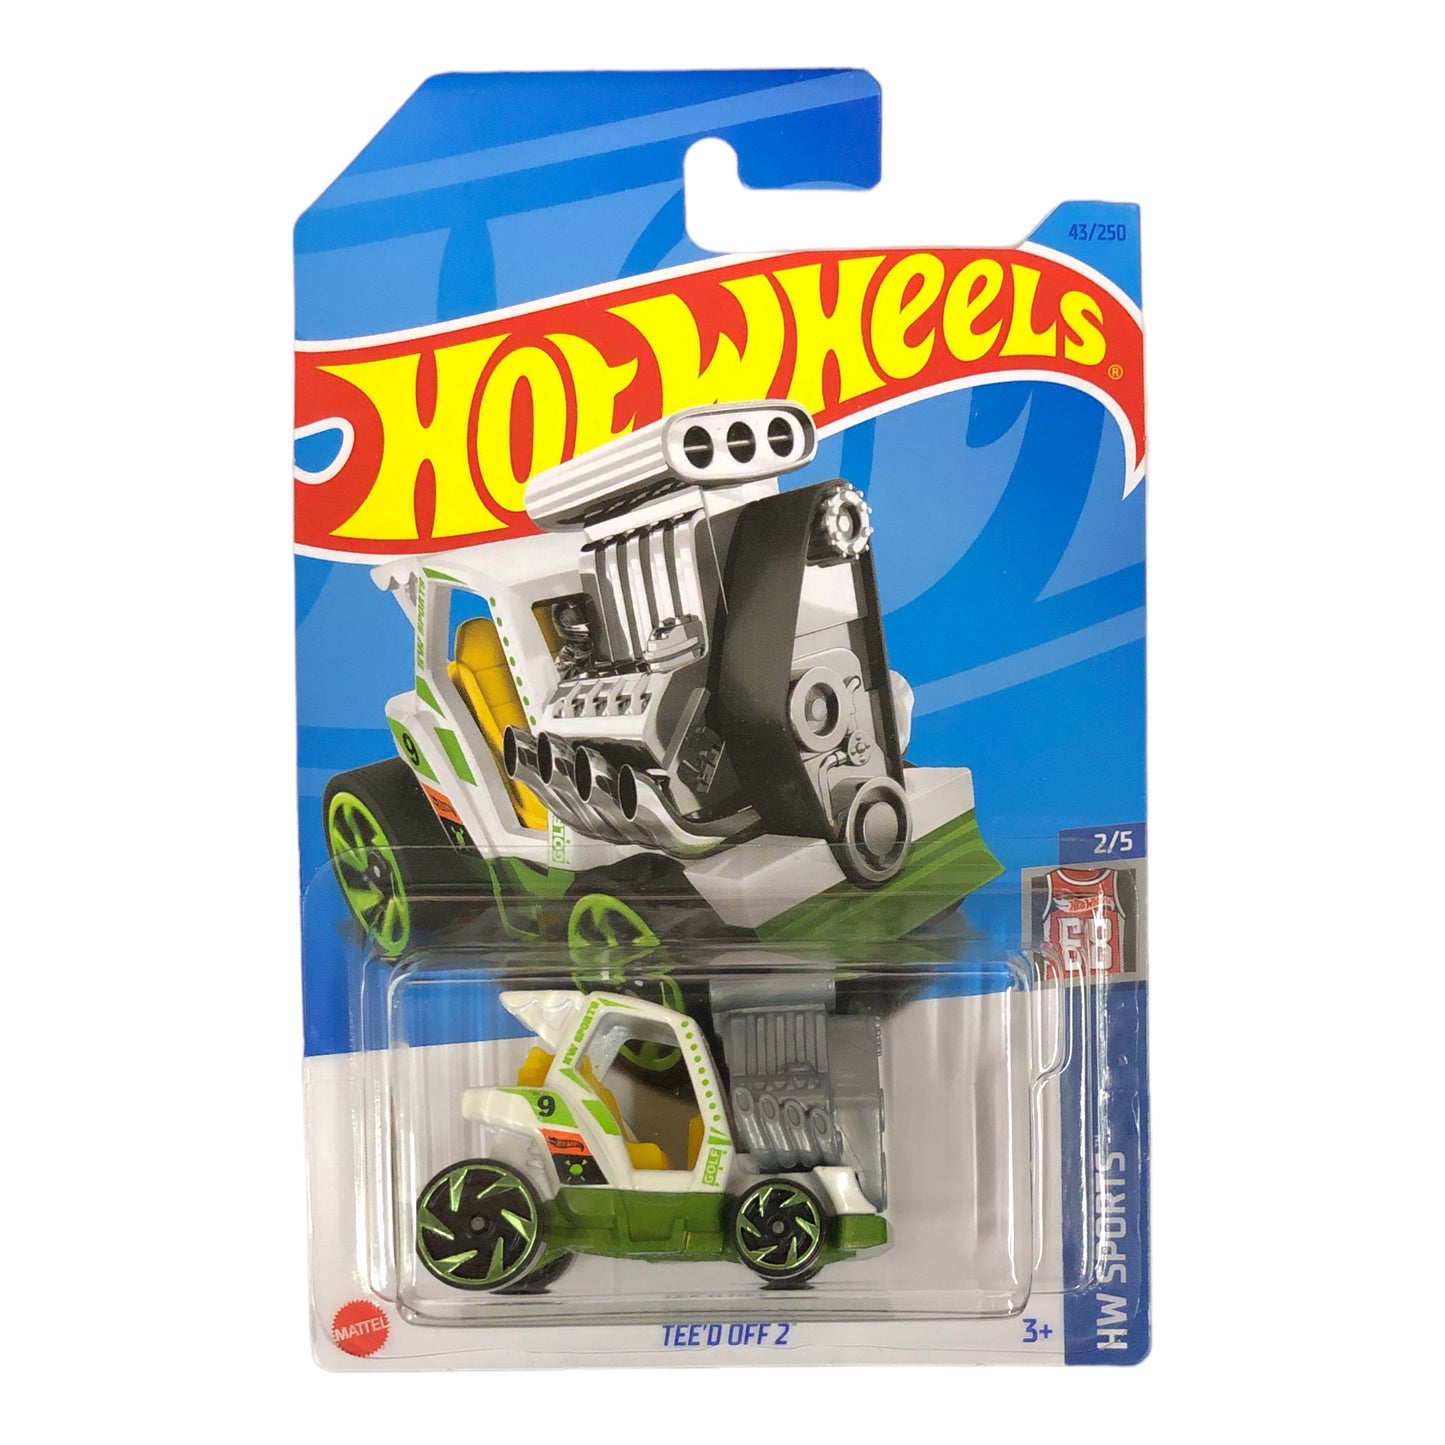 Hot Wheels HW SPORTS Mattel